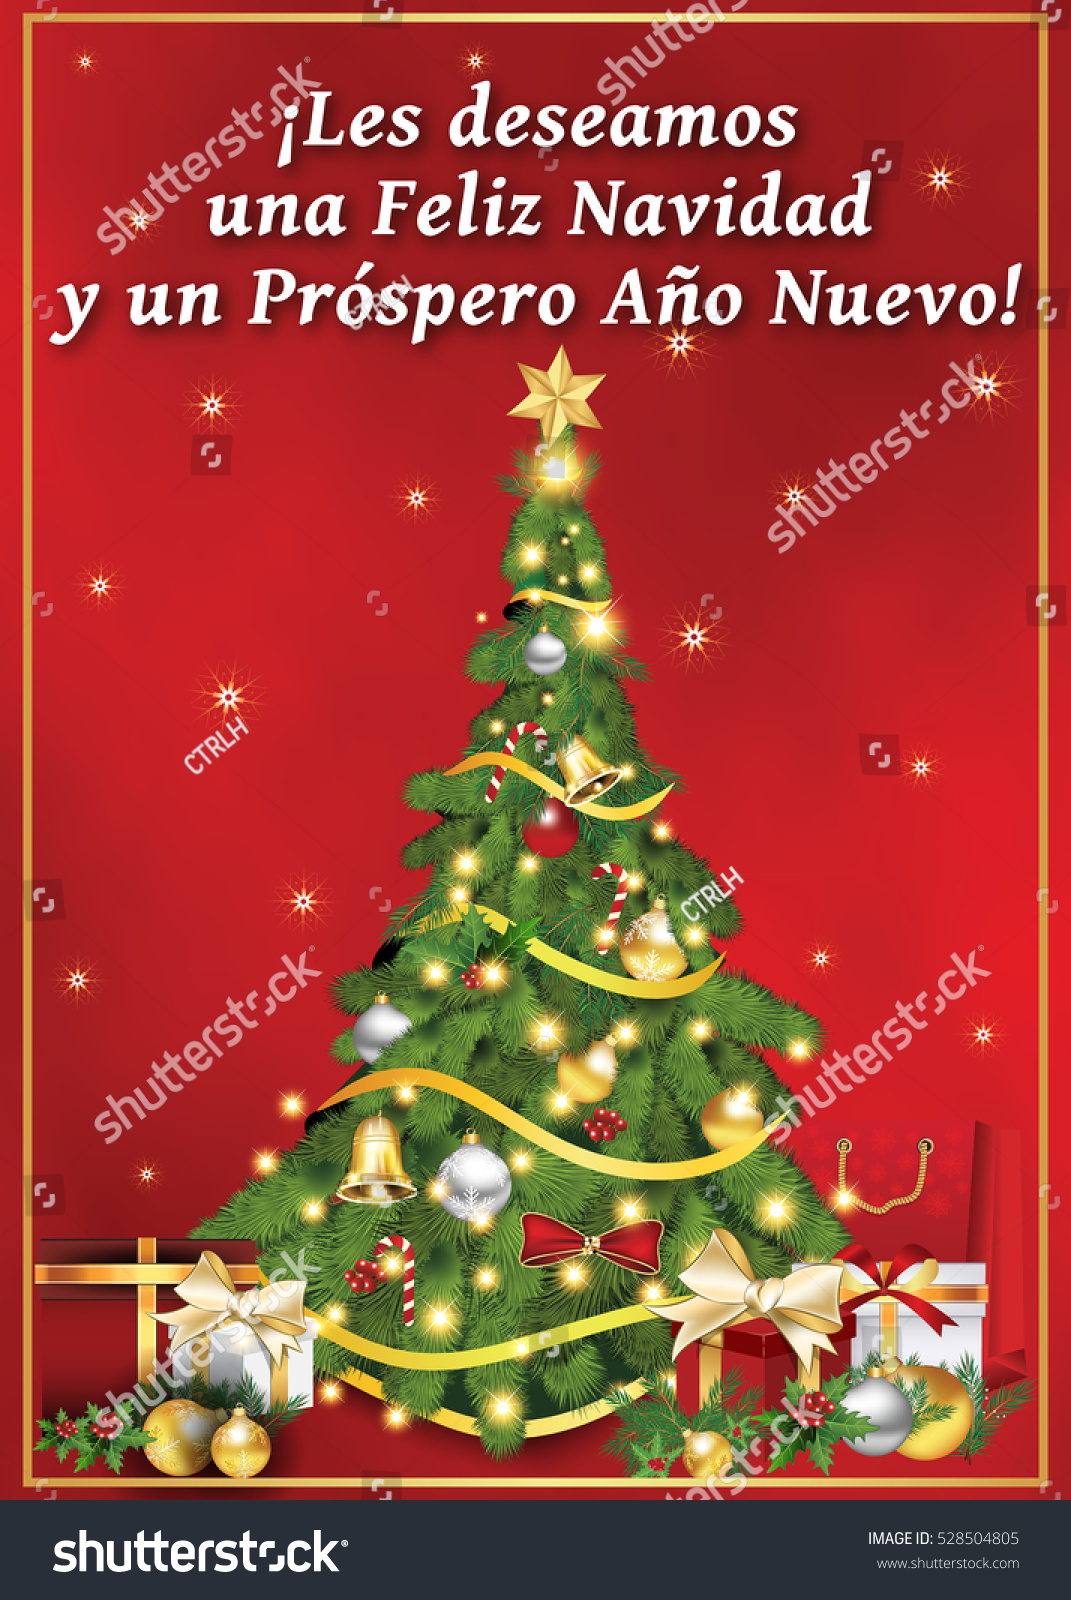 Spanish Seasons Greetings Christmas New Year Stock Illustration 528504805